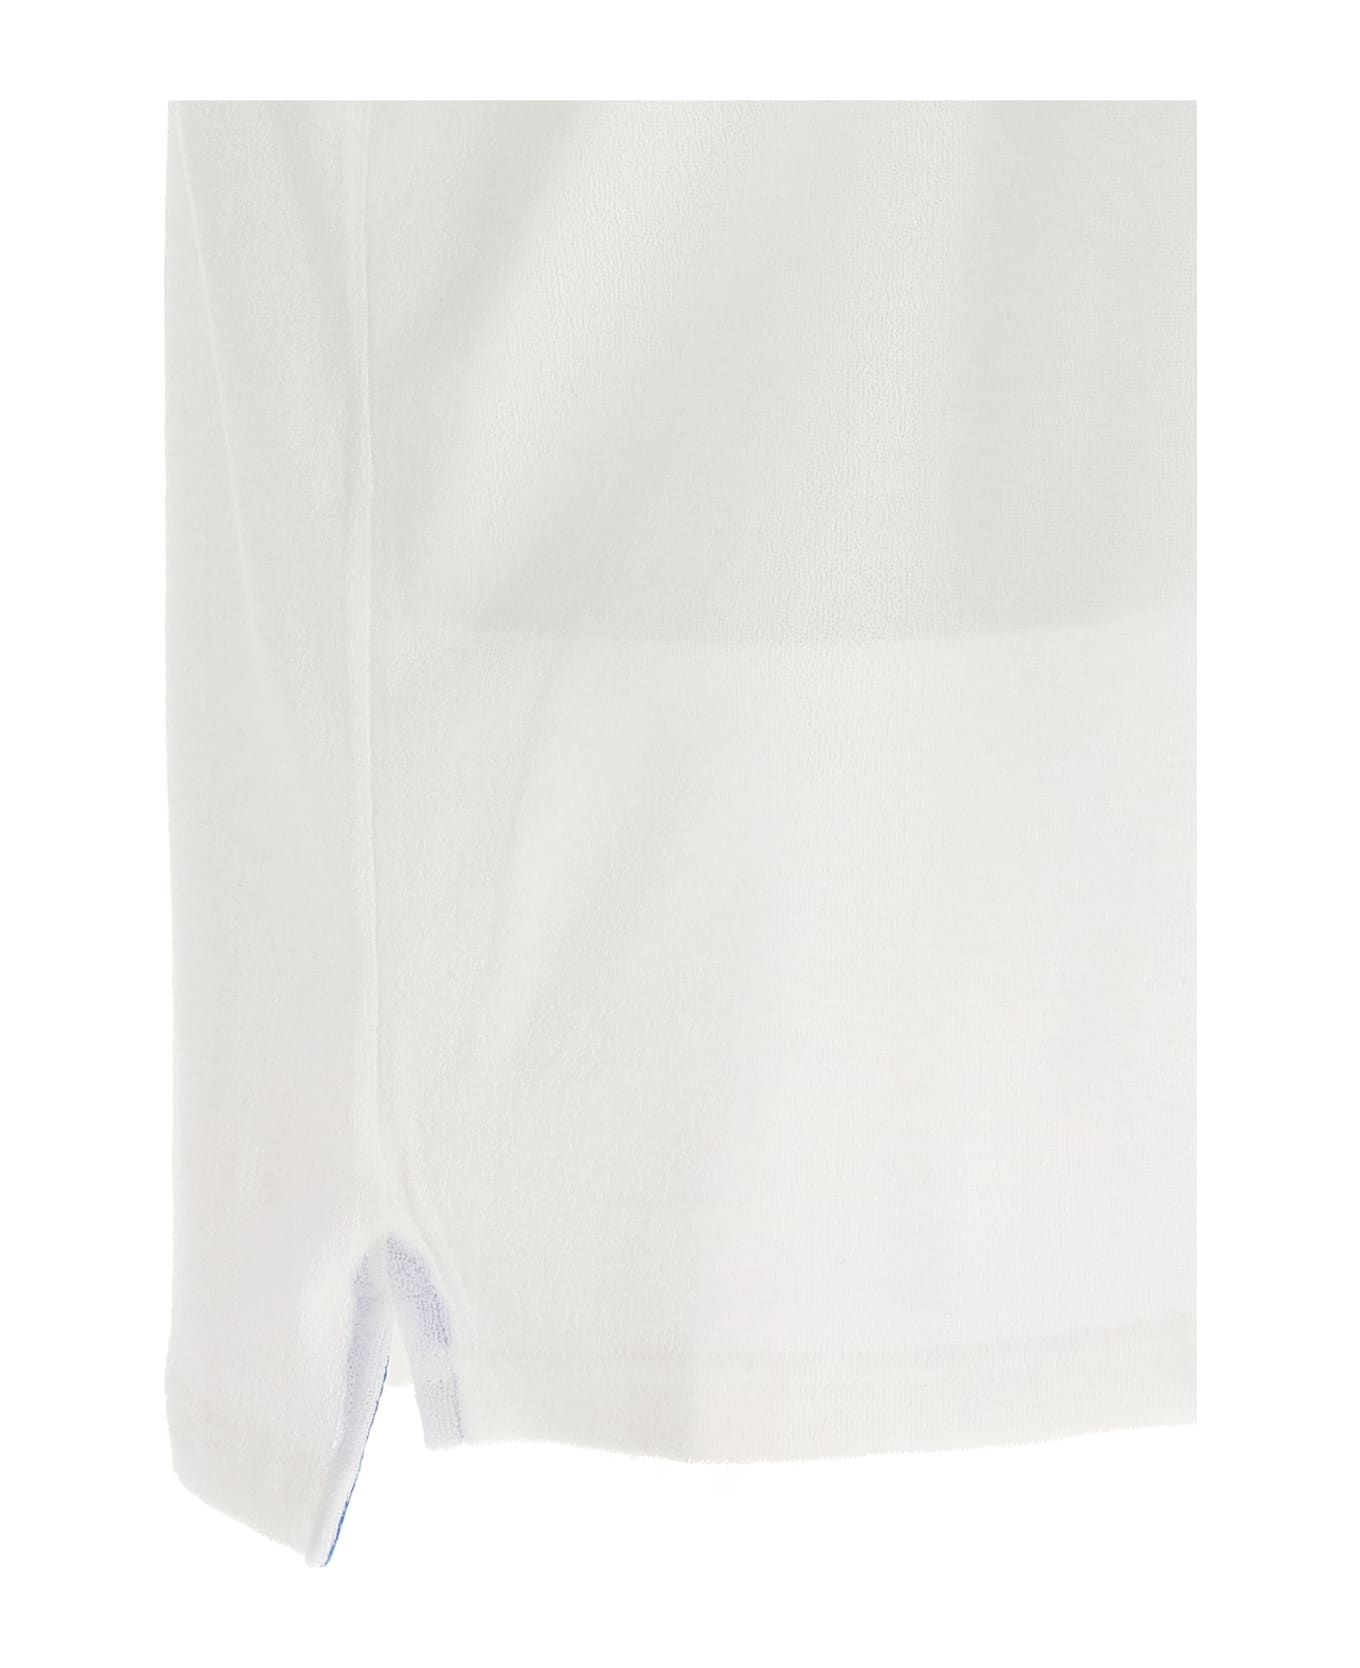 MC2 Saint Barth 'jeremy' Polo Shirt - White